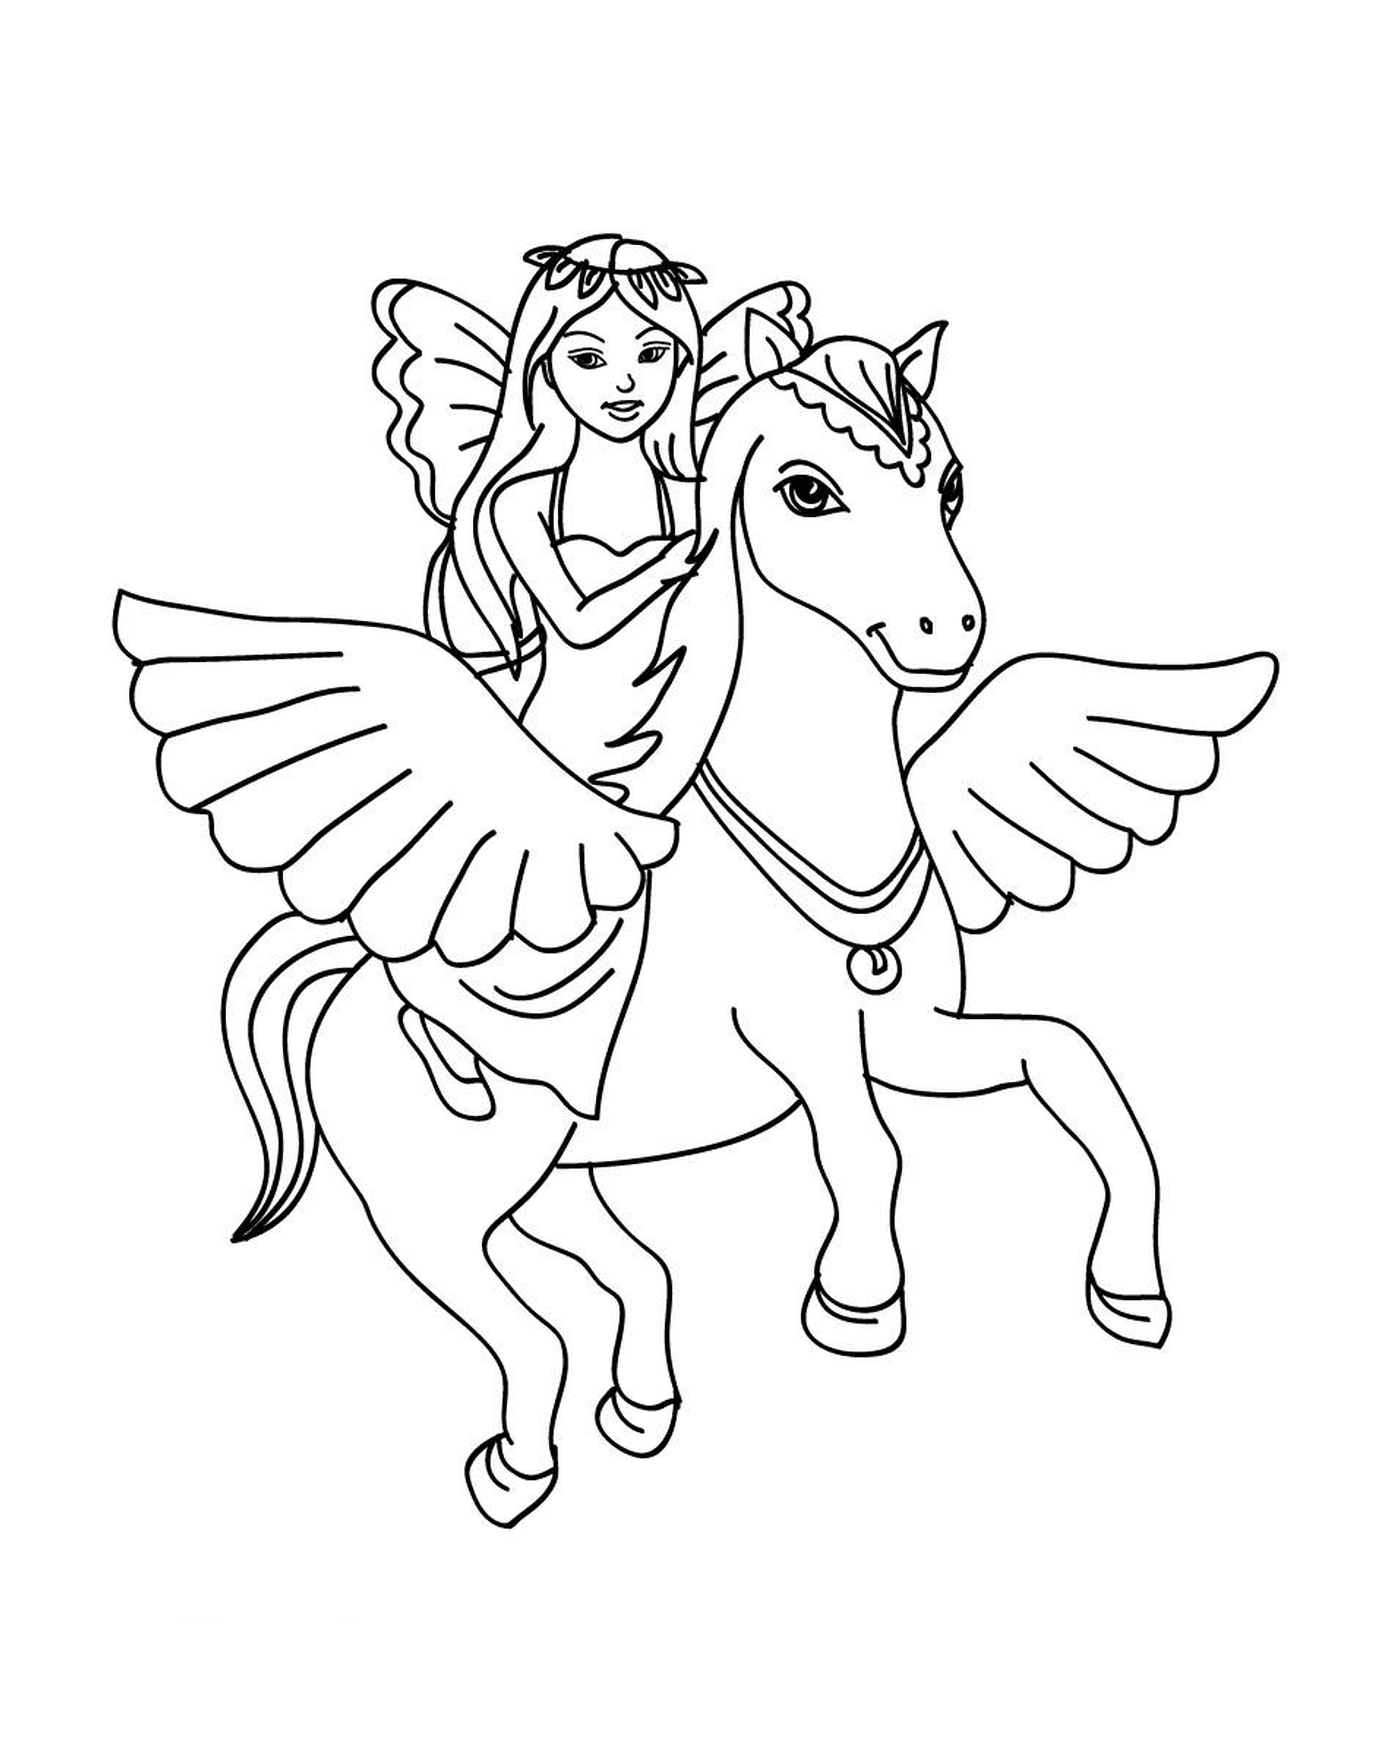  A princesa e seu cavalo 